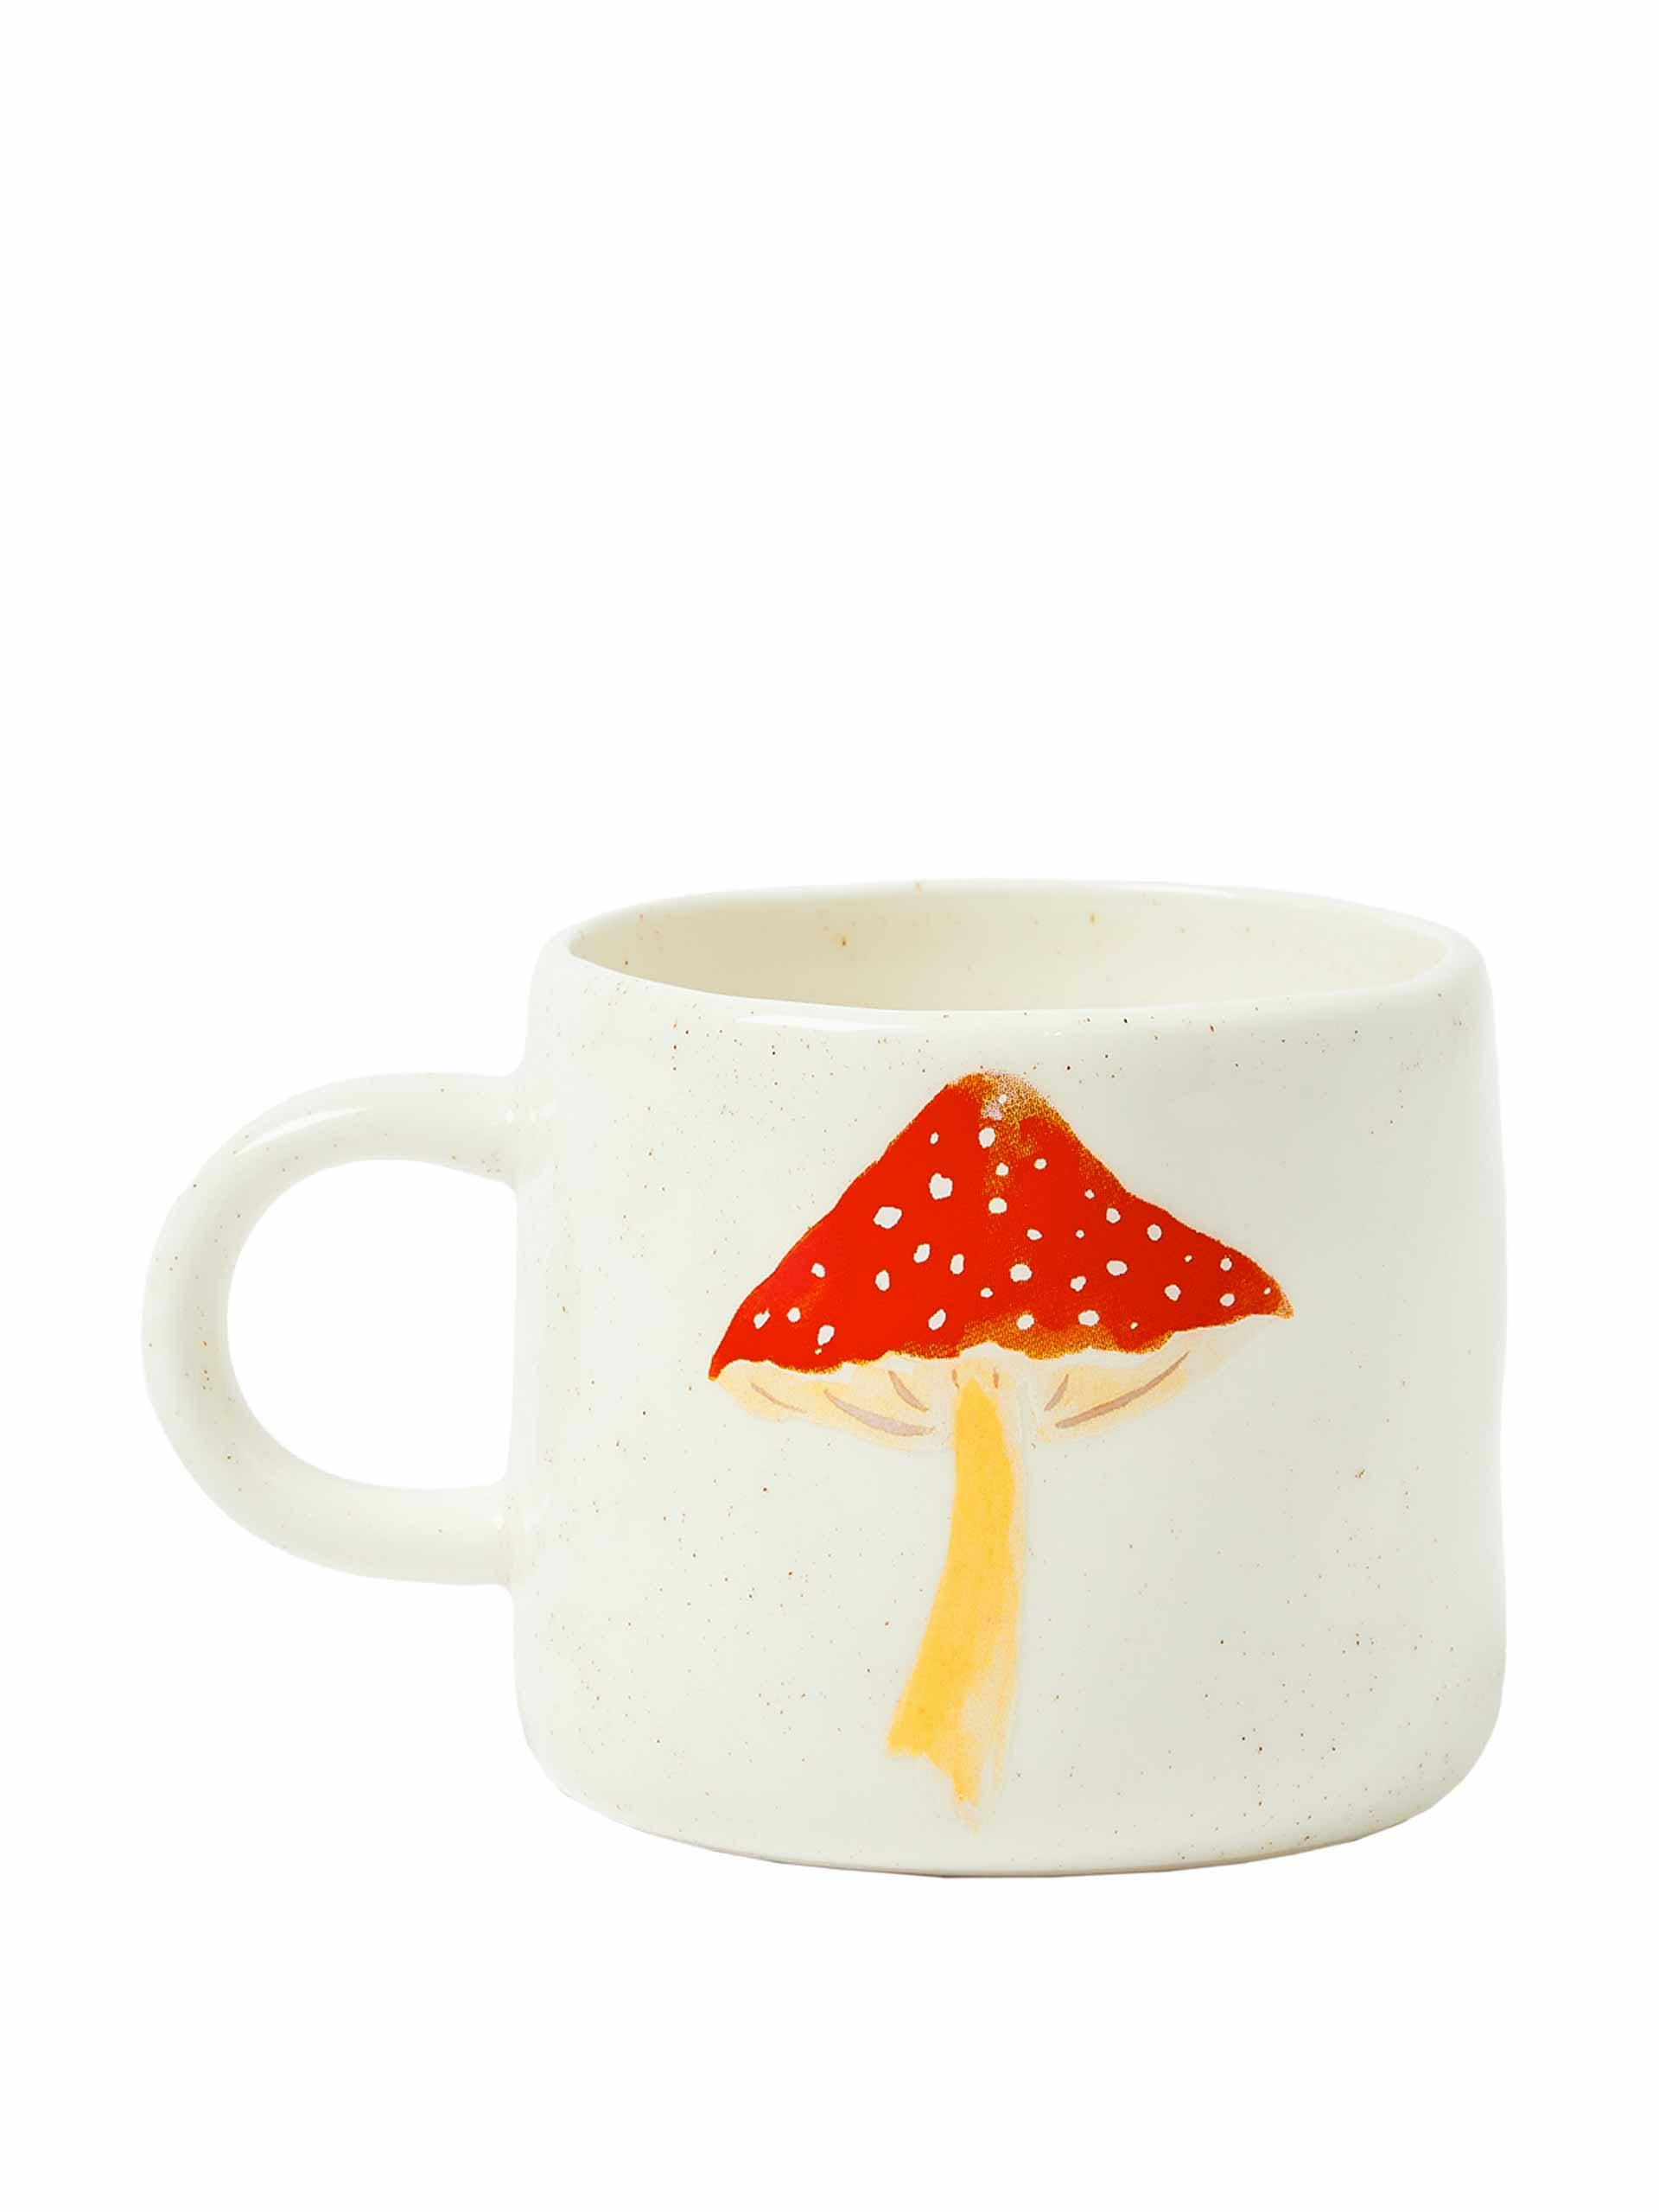 Toadstool white ceramic mug